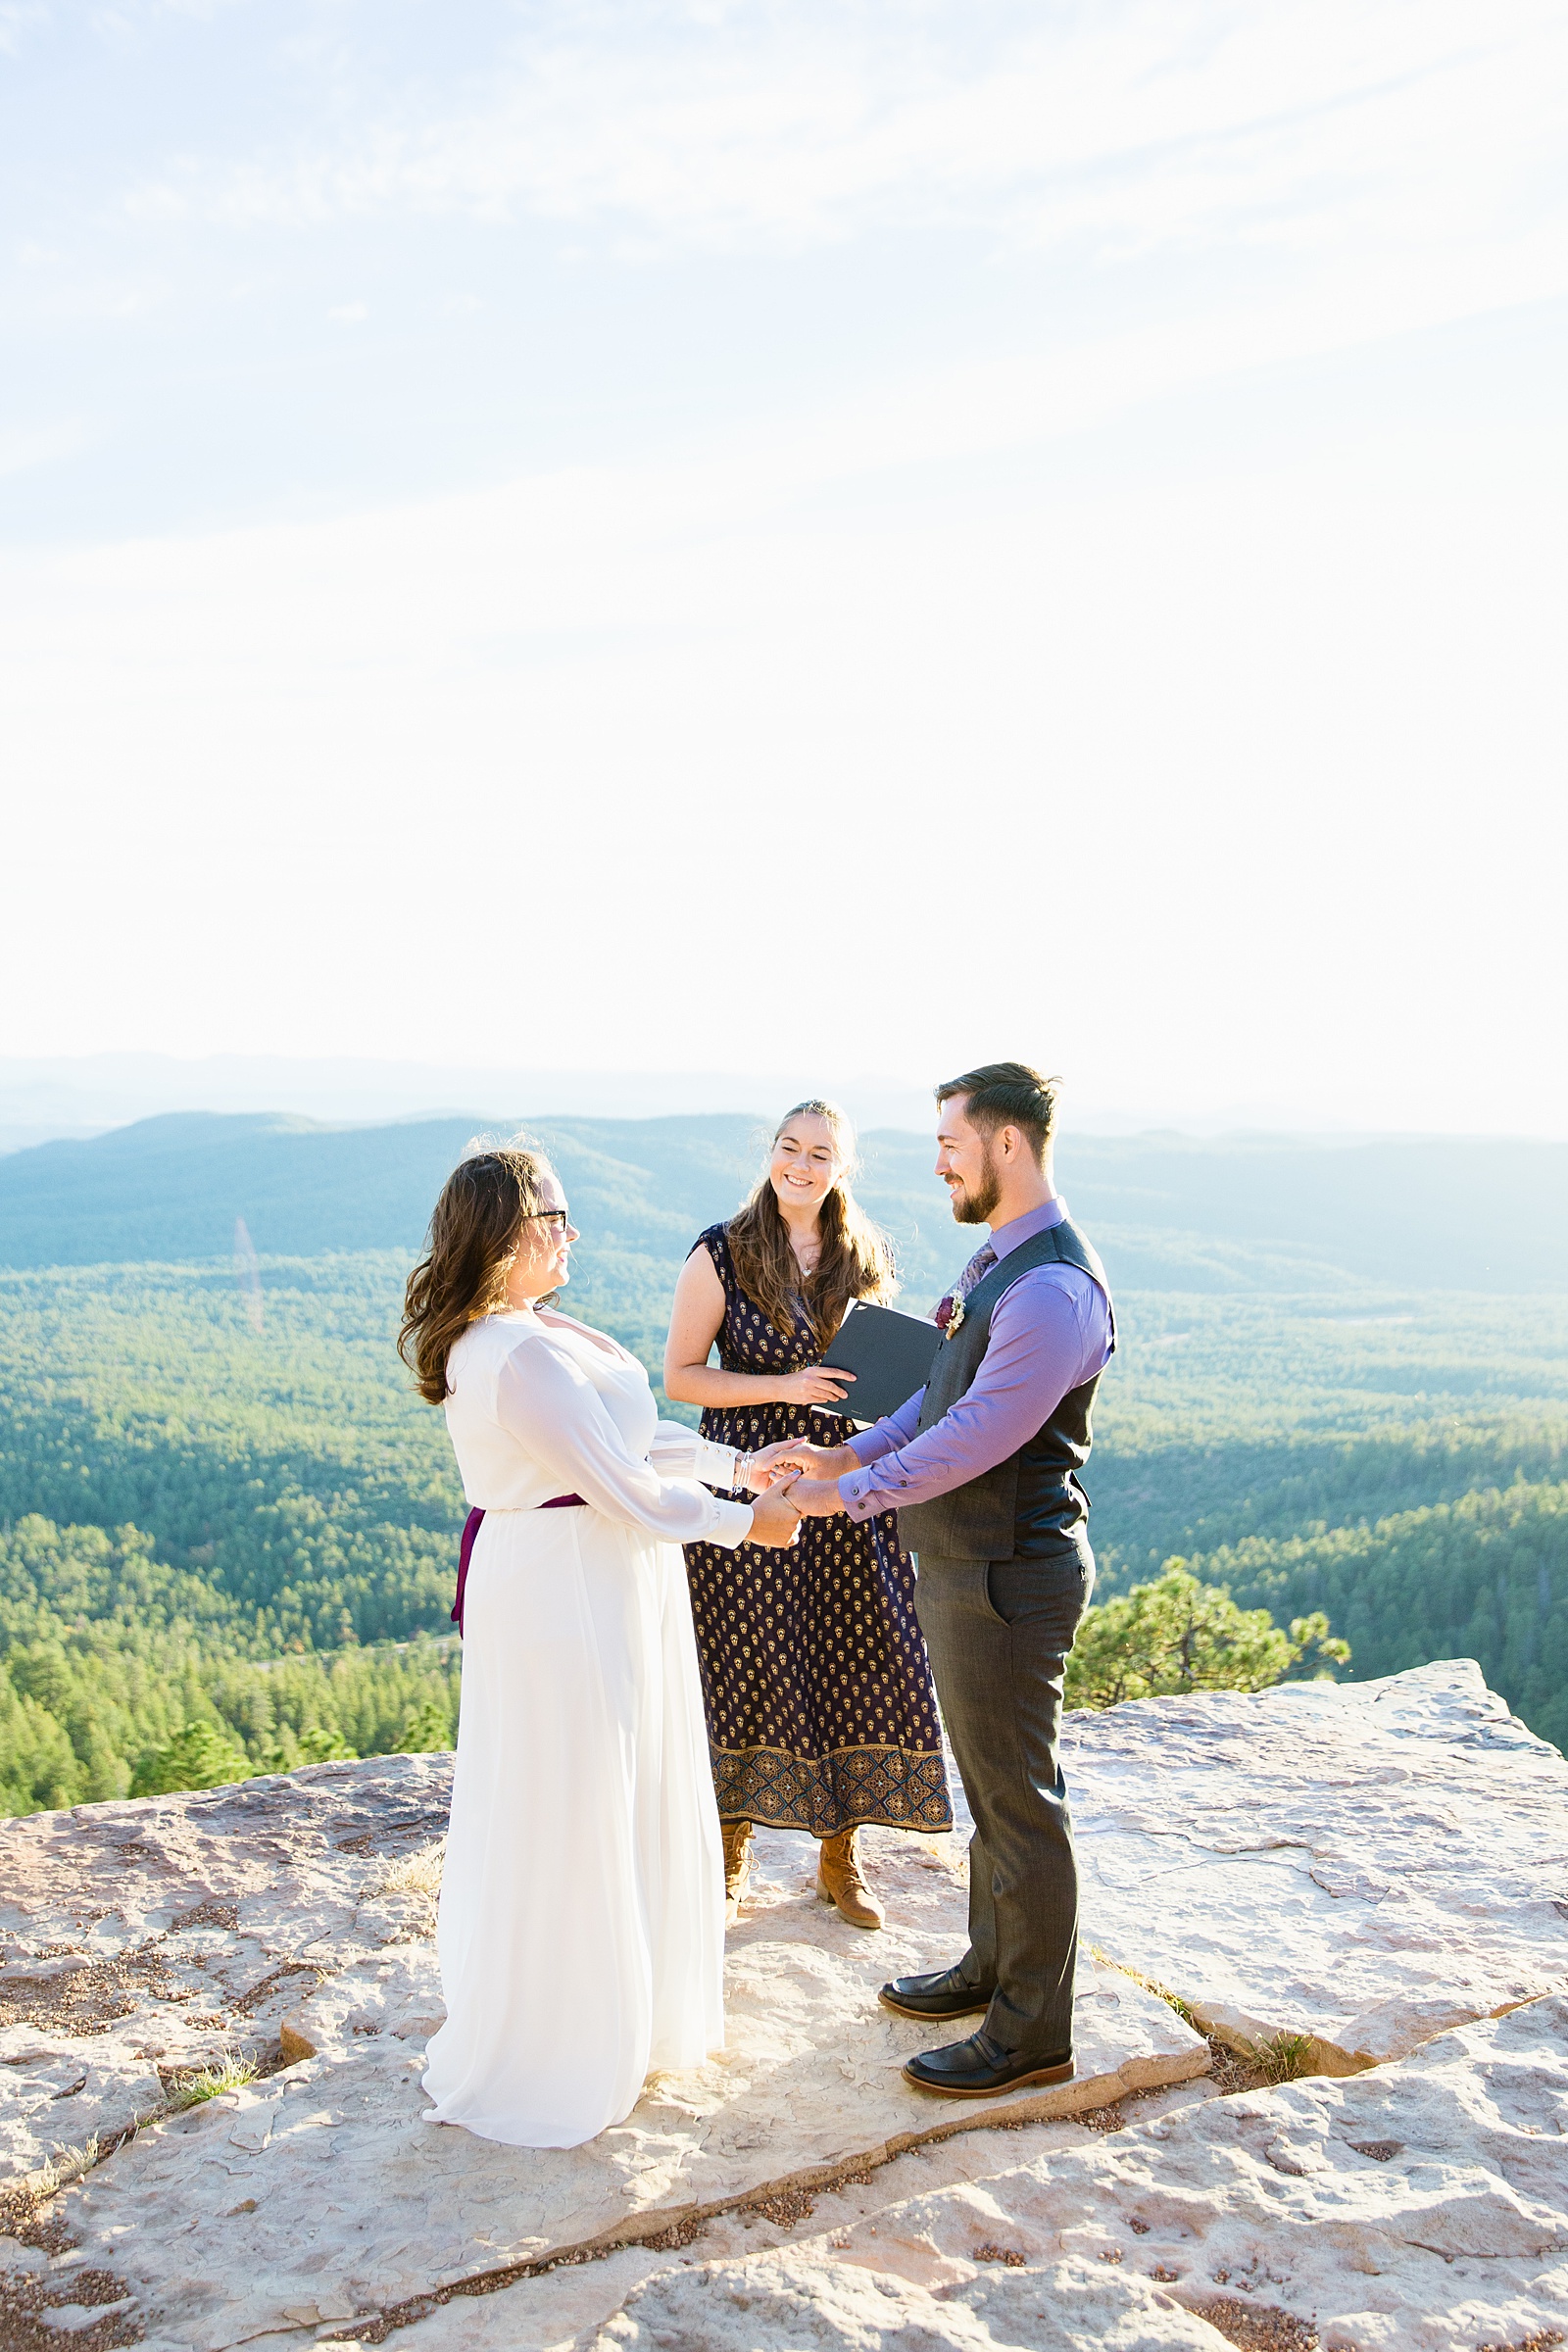 Wedding ceremony at Mogollon Rim by Arizona elopement photographer PMA Photography.